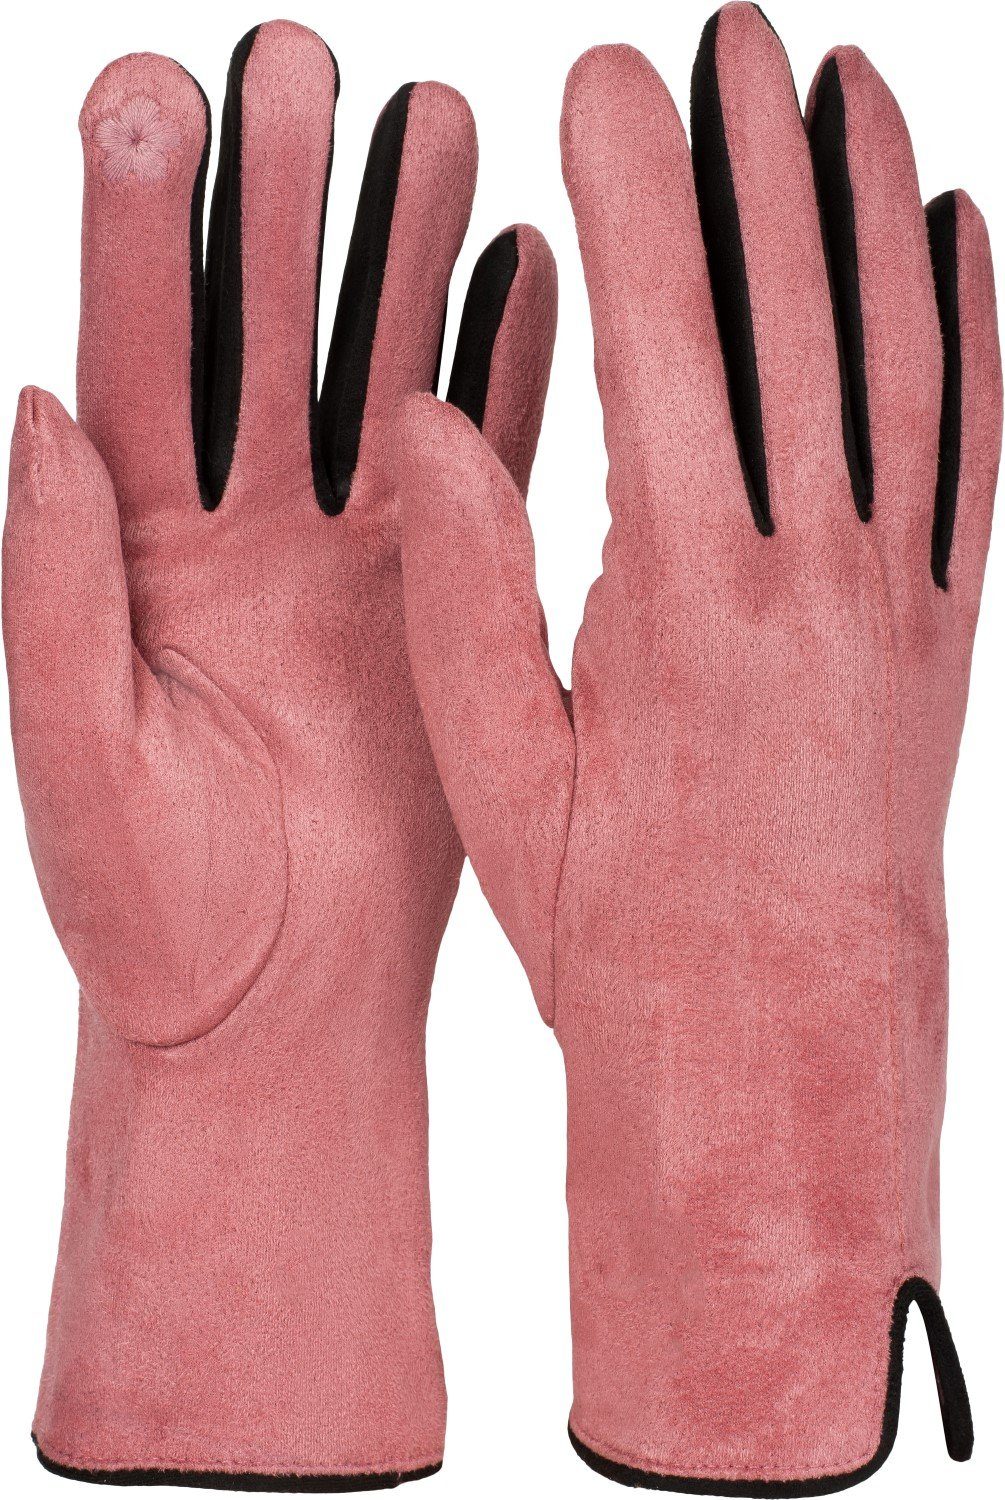 styleBREAKER Fleecehandschuhe Touchscreen Handschuhe Kontrast Rose